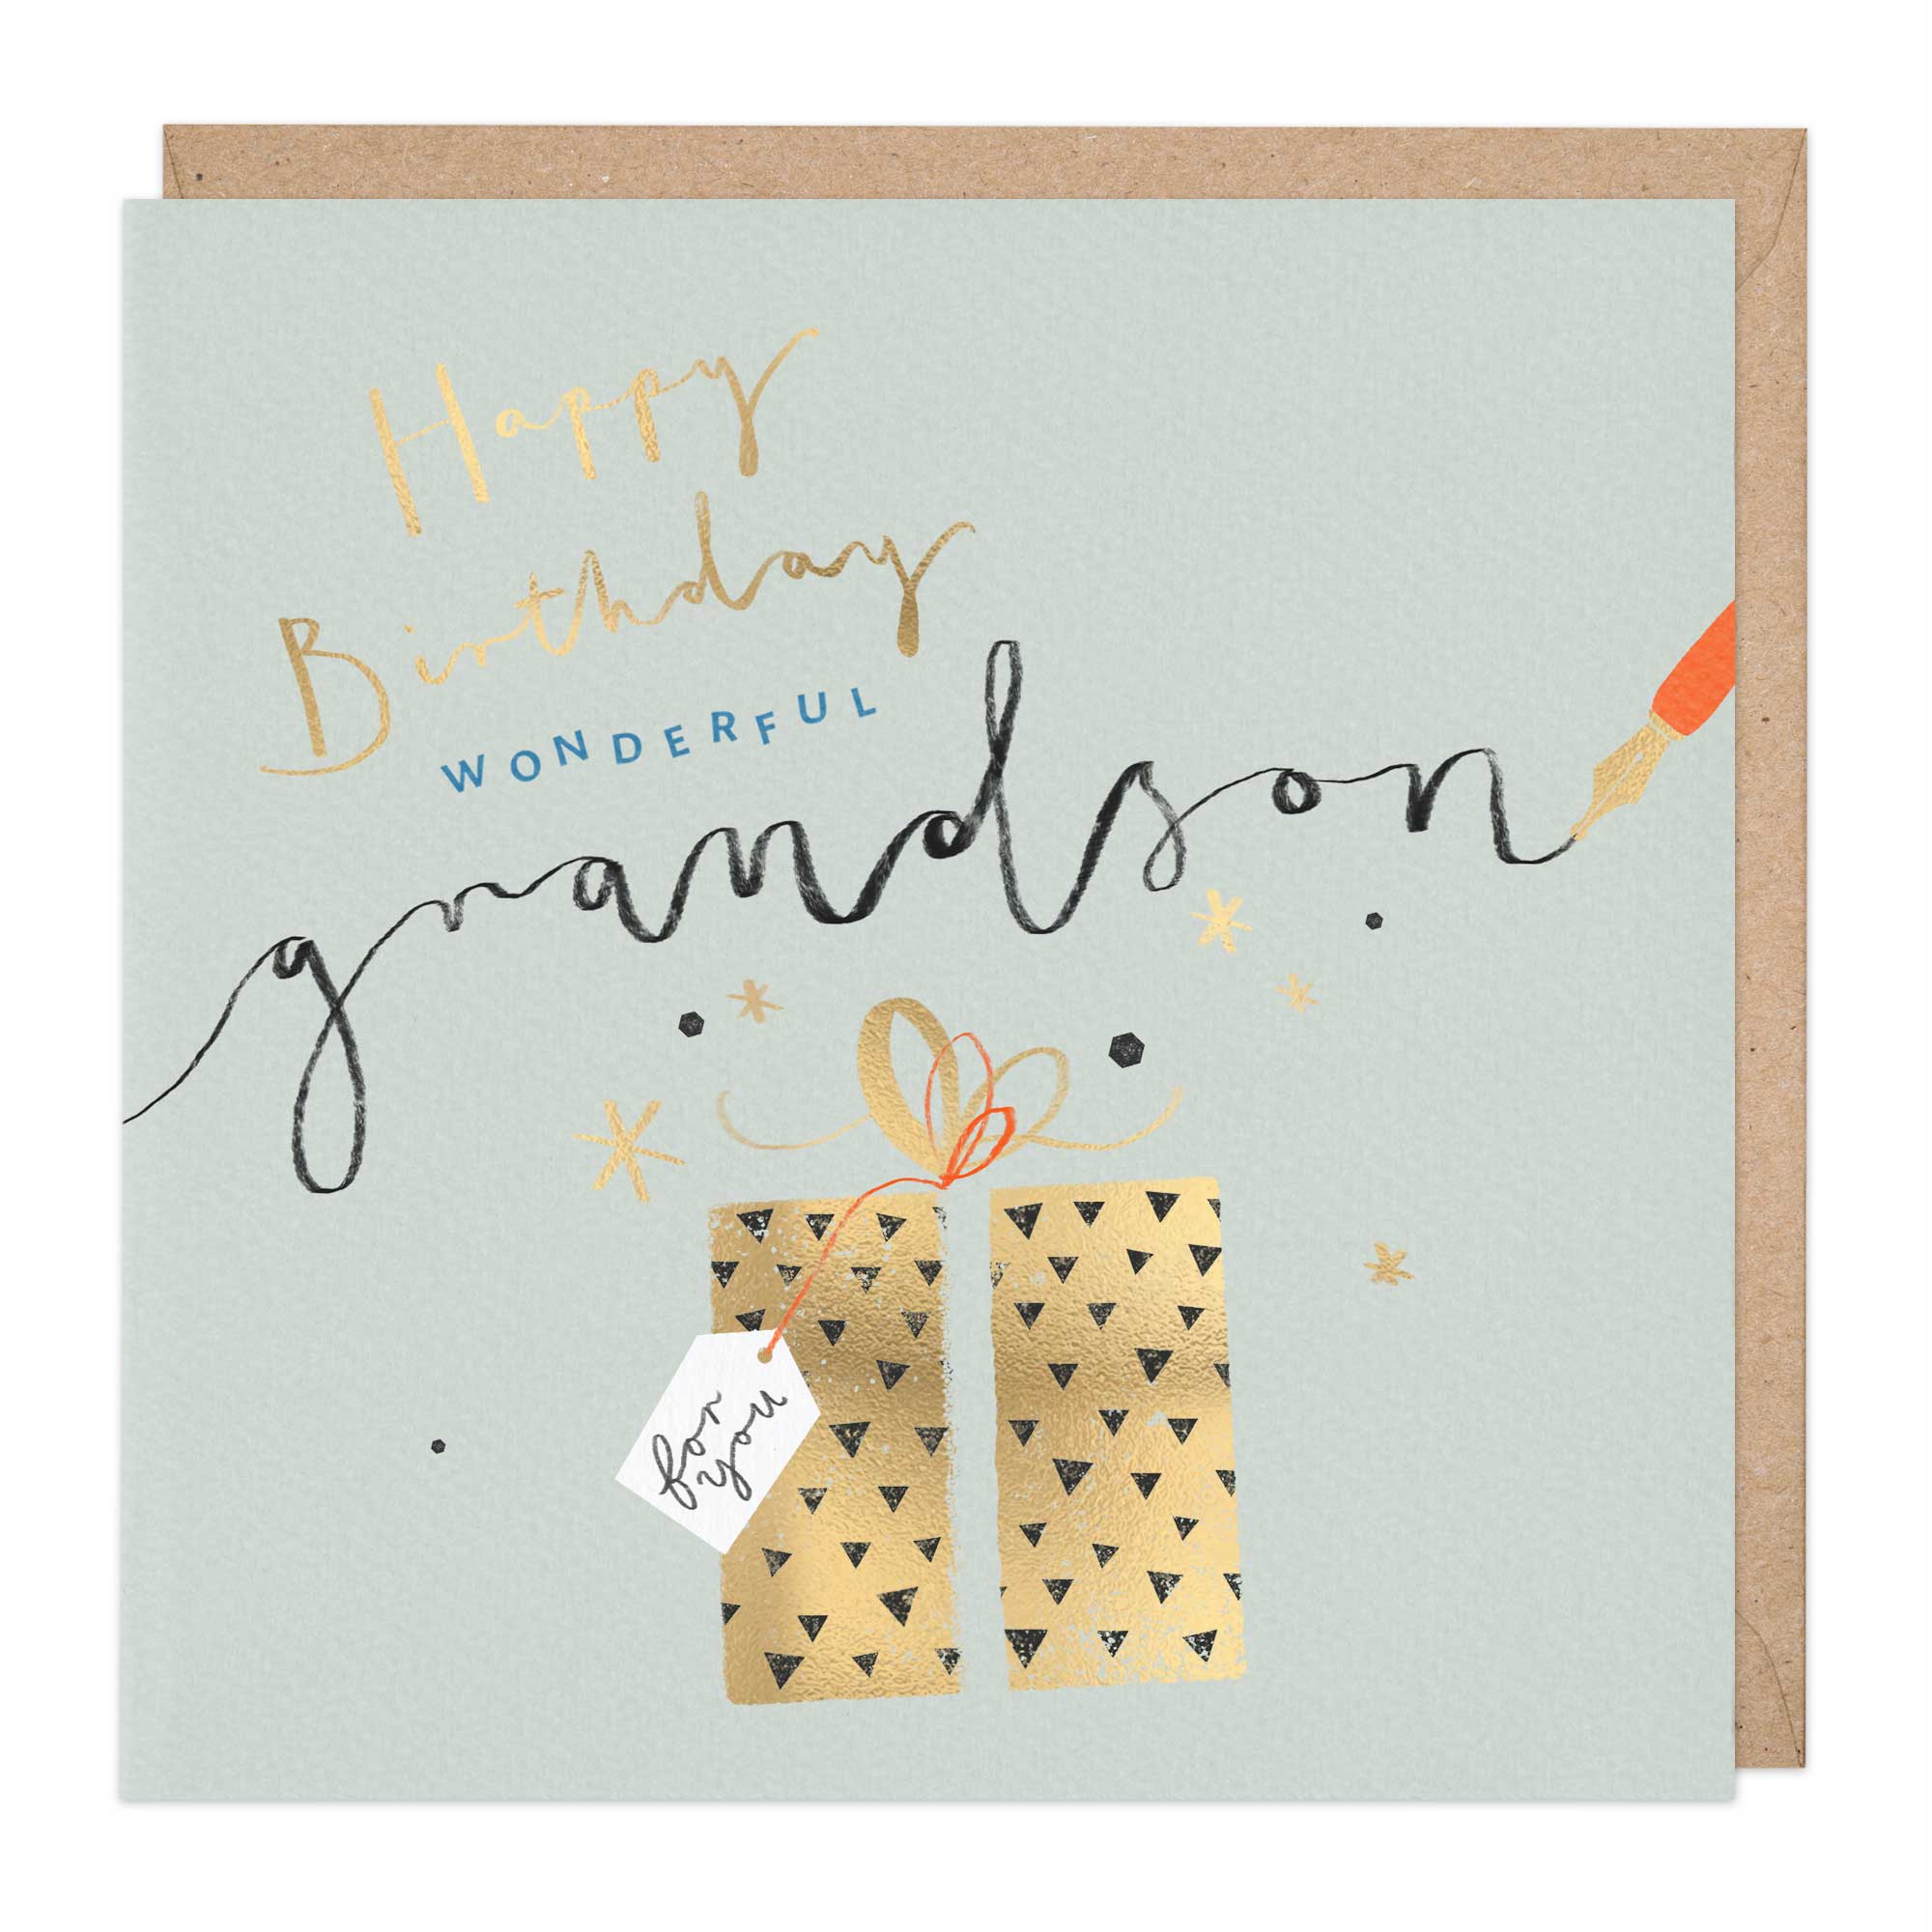 Wonderful Grandson Birthday Card